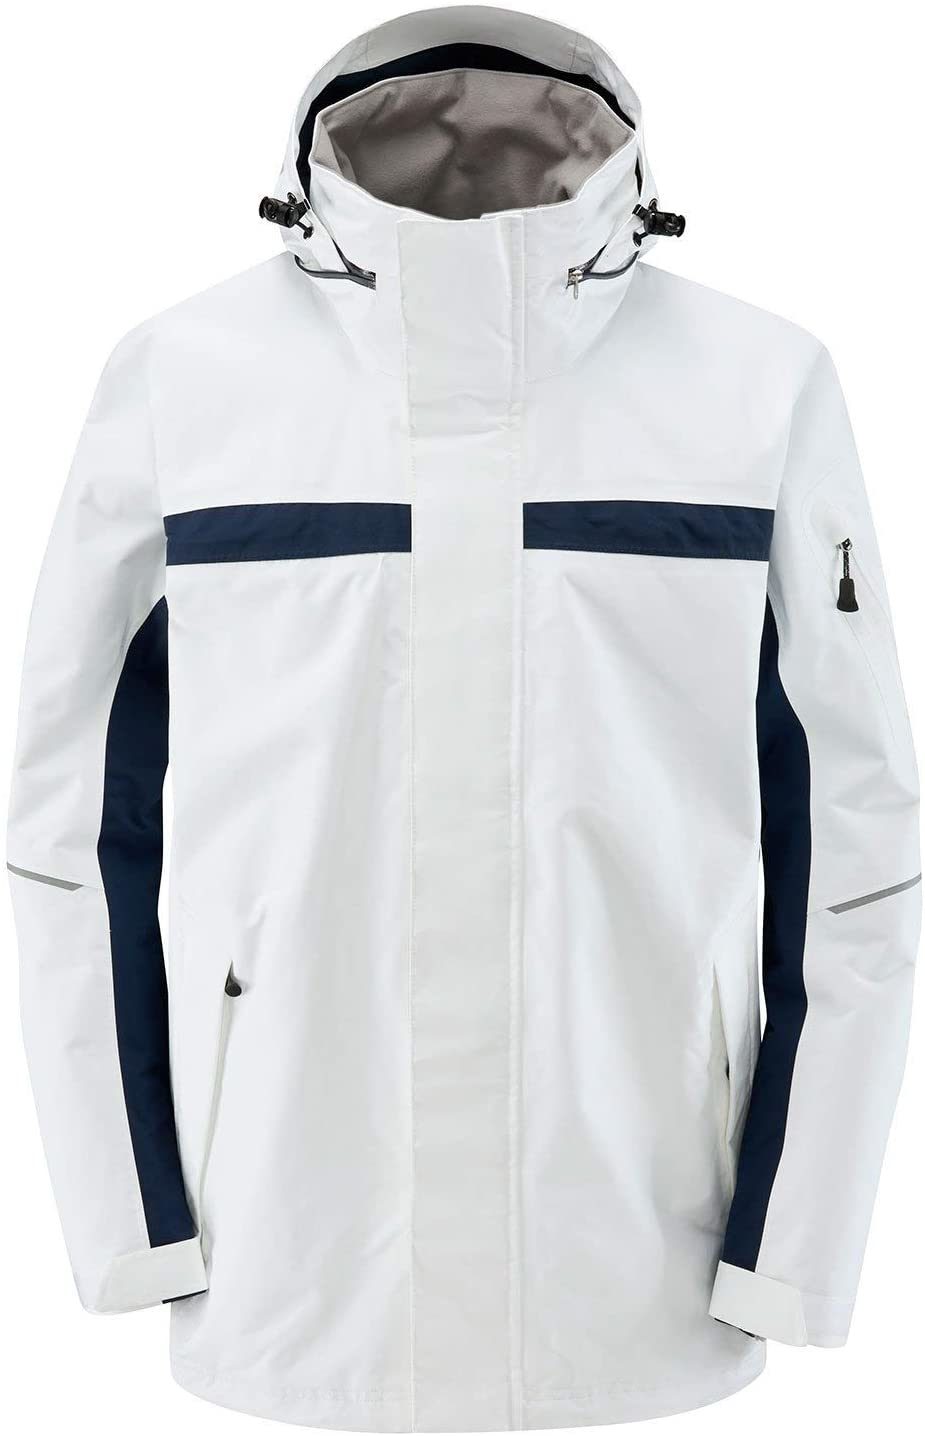 Coat Jacket Coat Optical White. Waterproof & Breathable